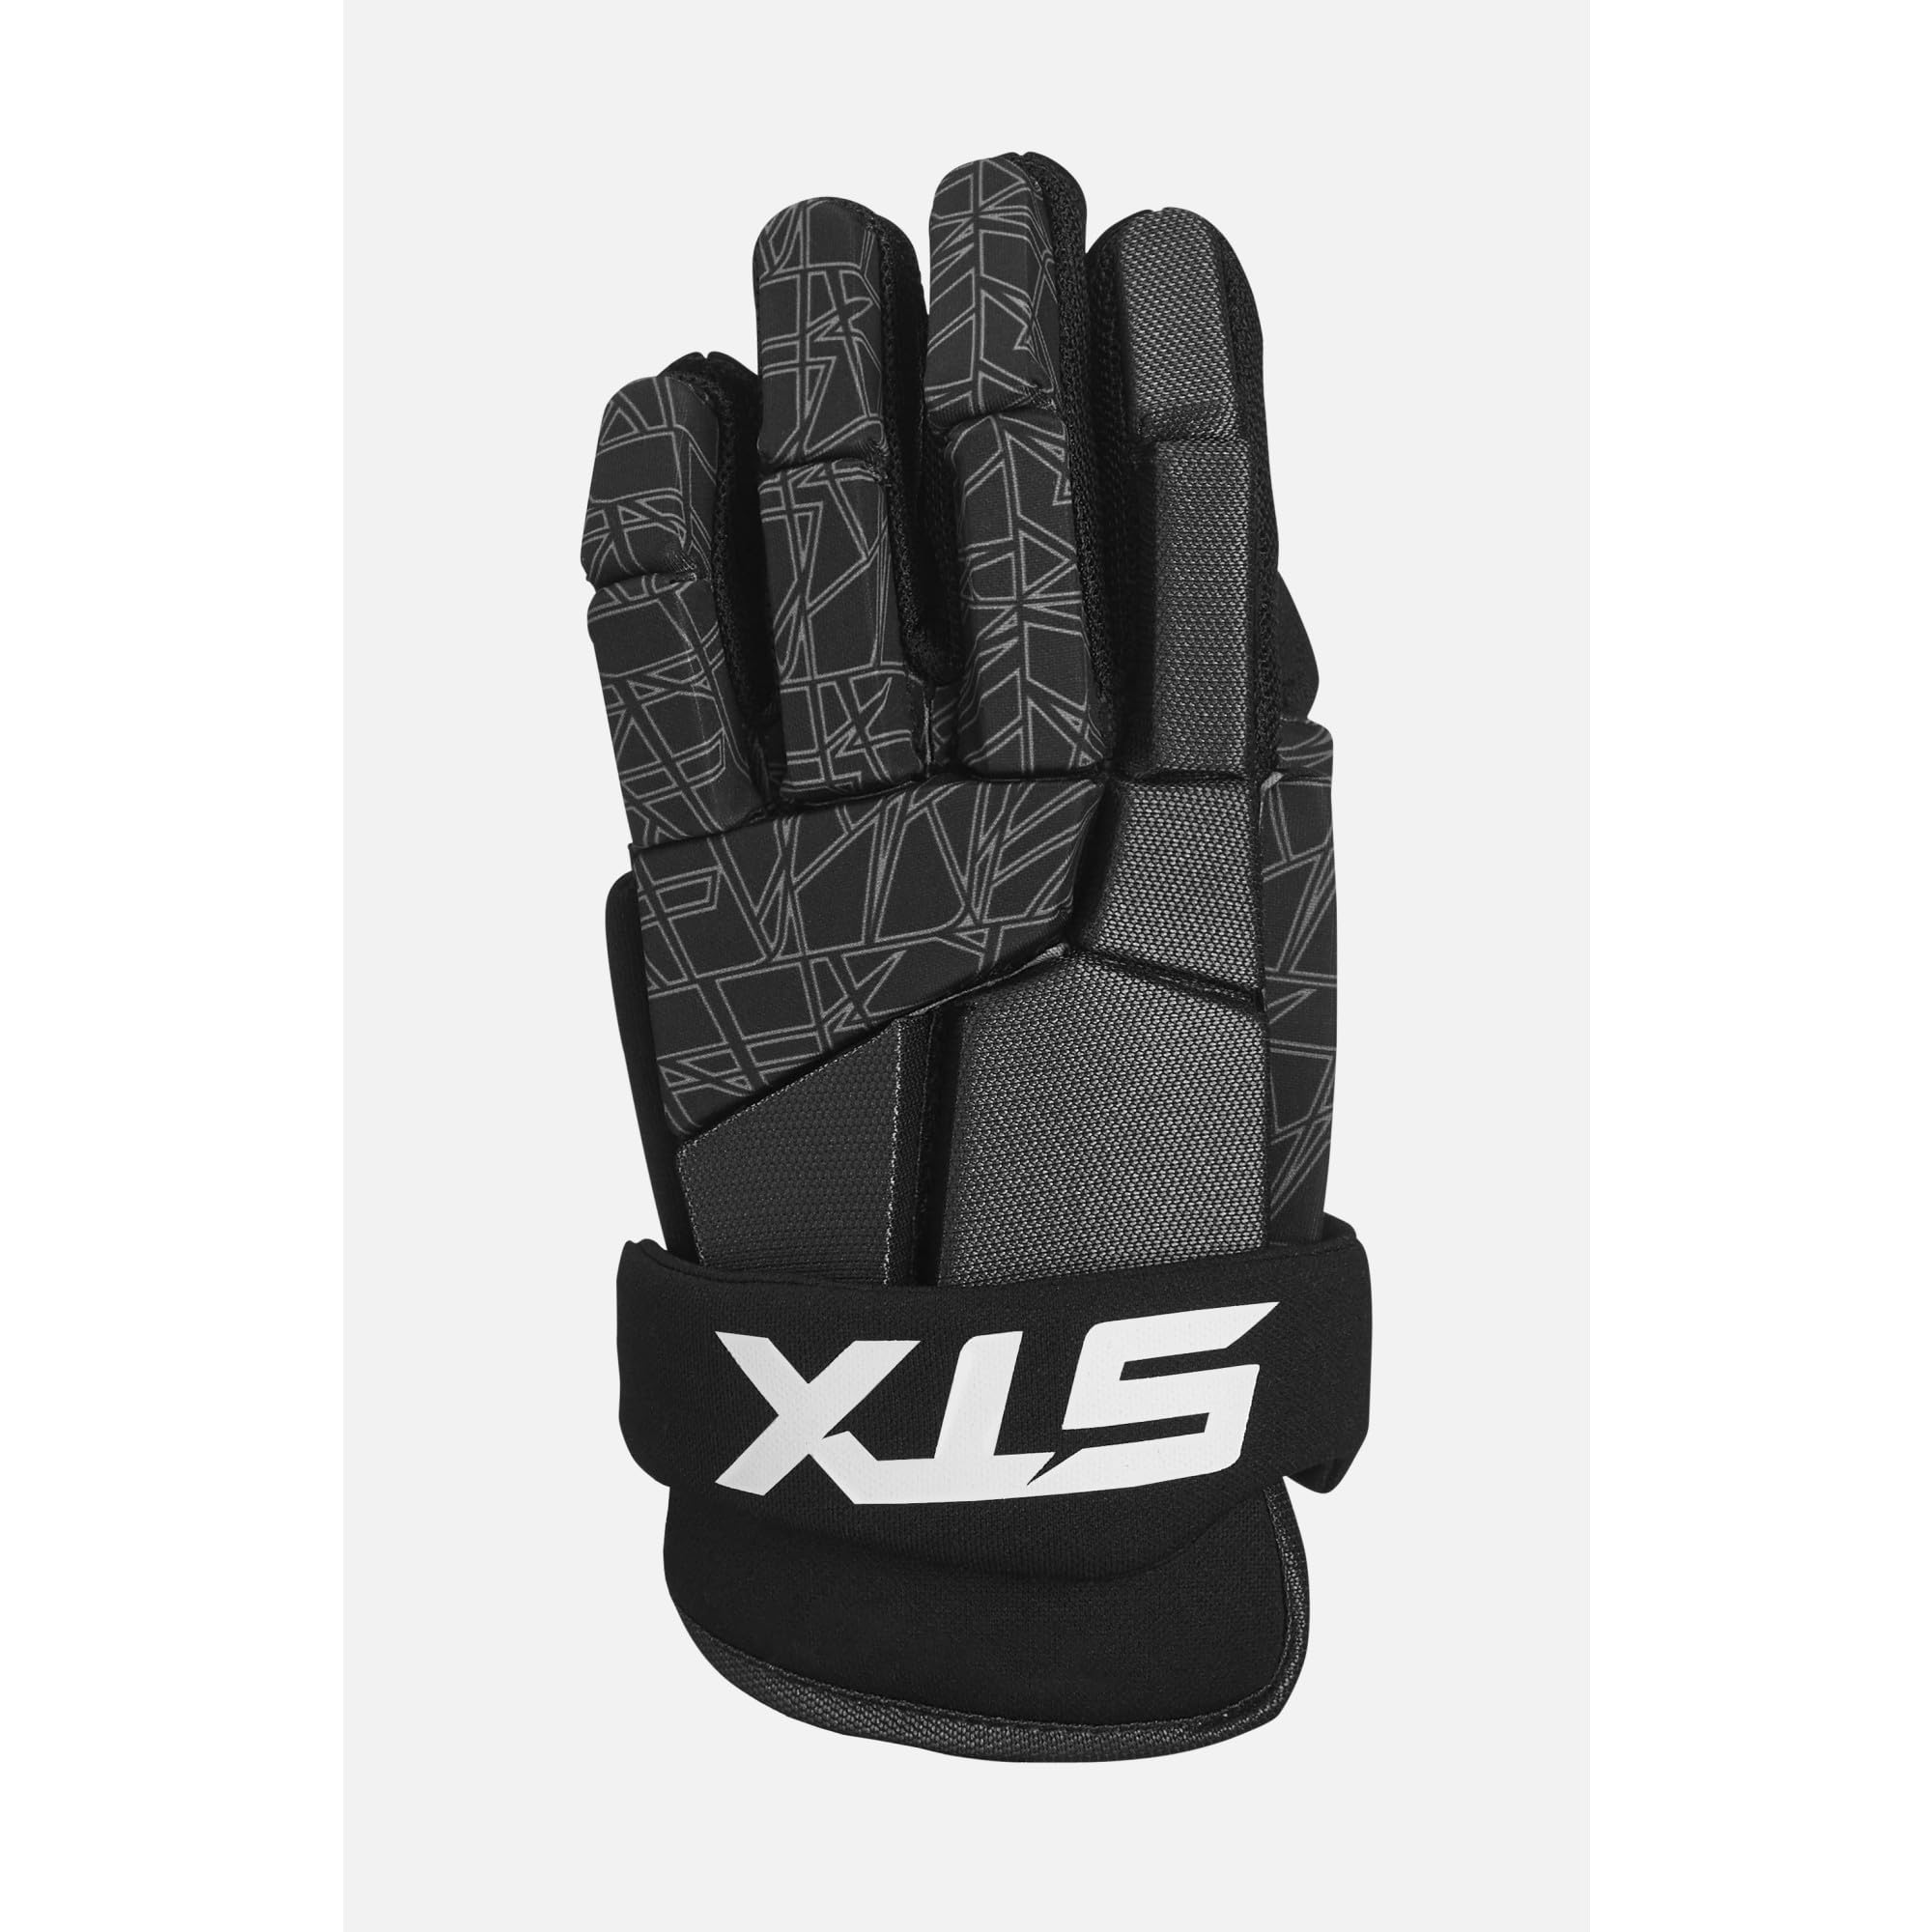 STX Stallion 75 Lacrosse Gloves, Pair, Black/Gray, Small